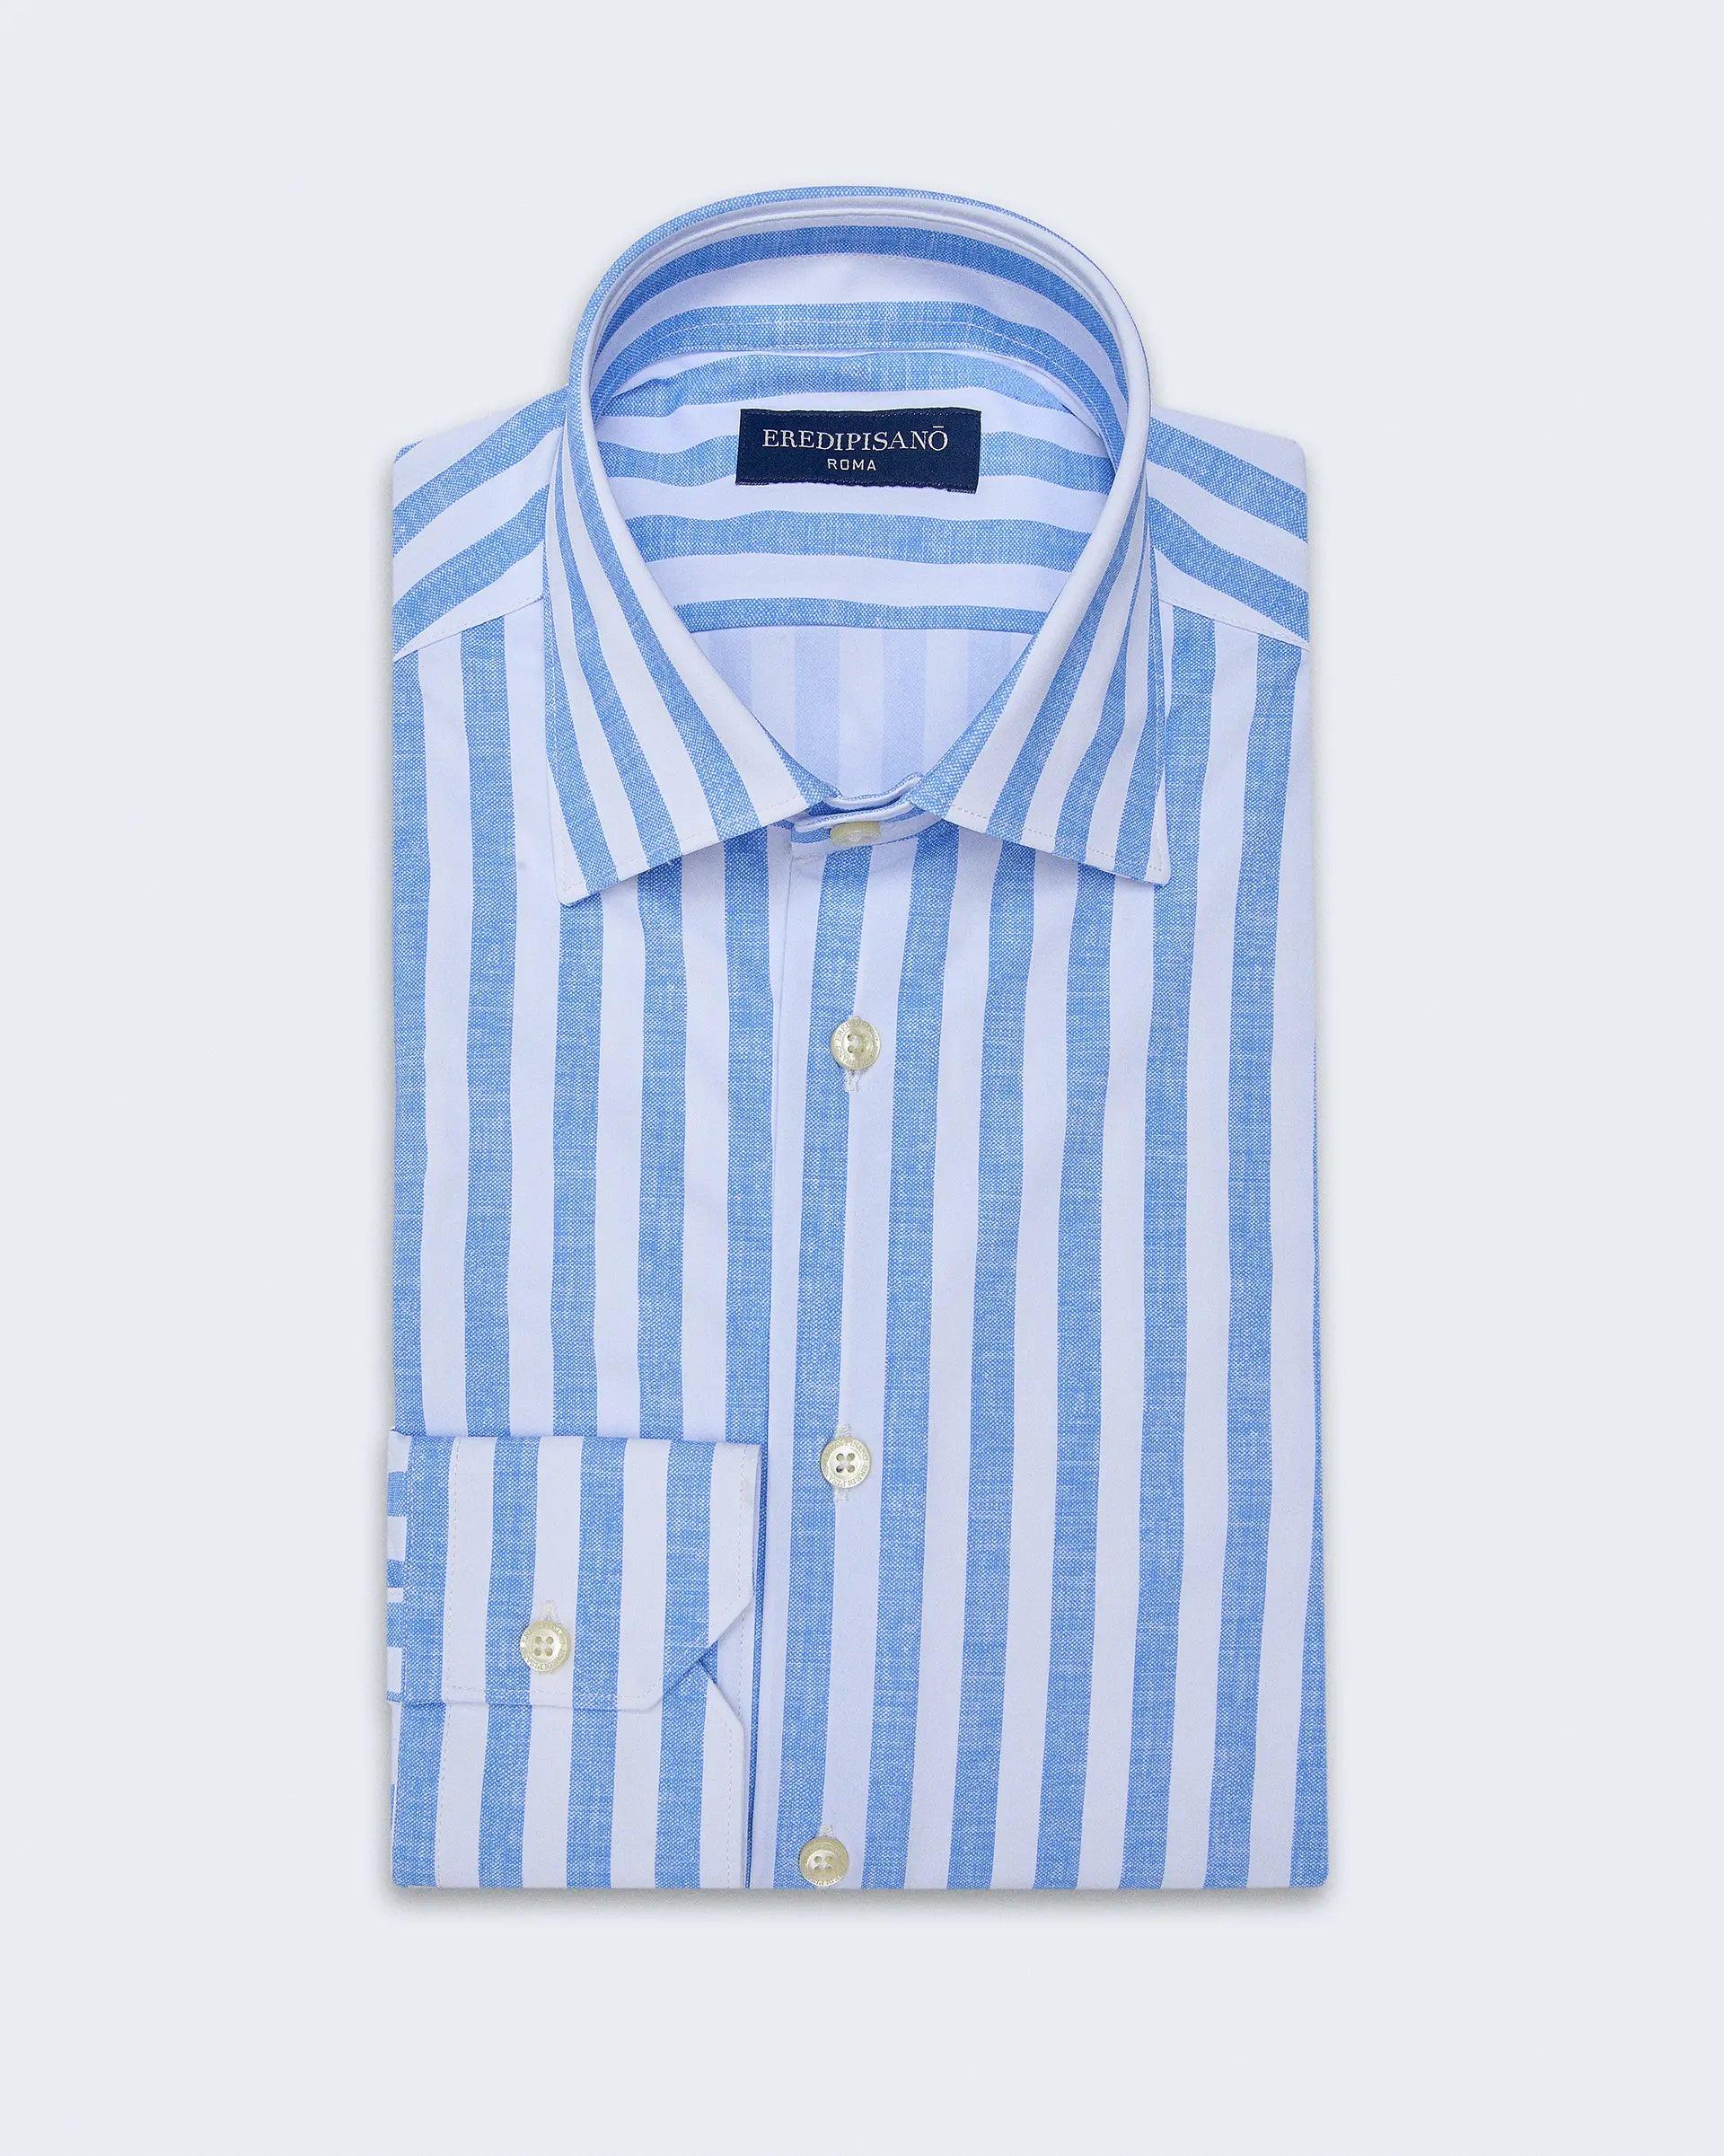 Camicia rigata azzurra easy iron confort fit